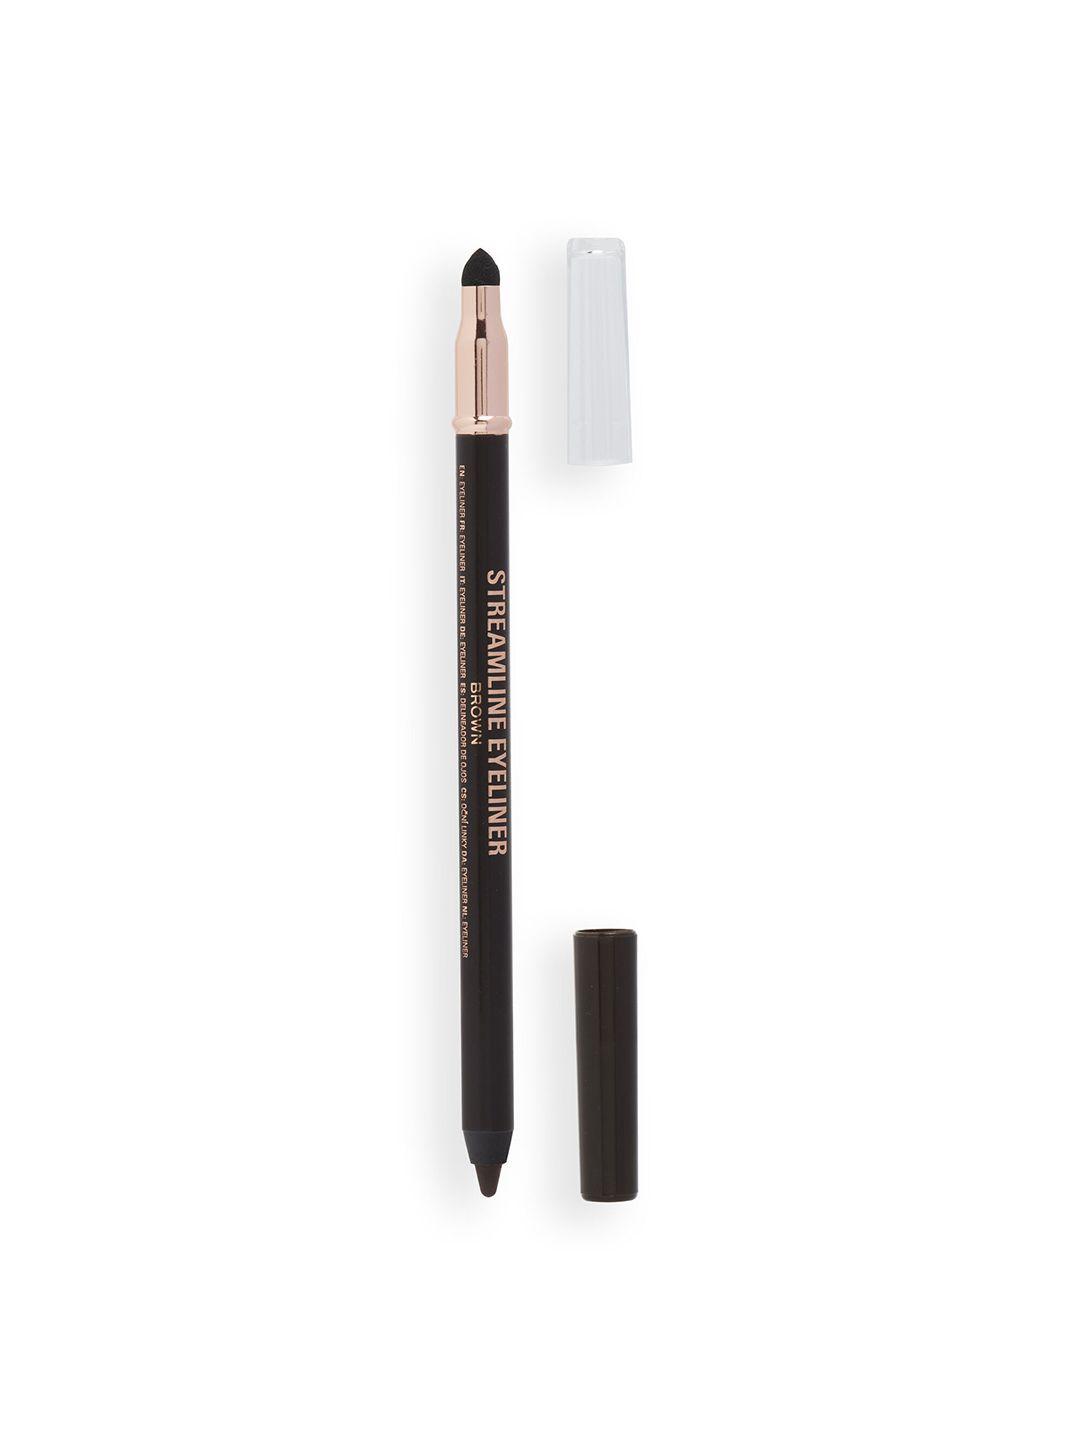 makeup revolution london streamline waterline smudge-proof eyeliner pencil - brown